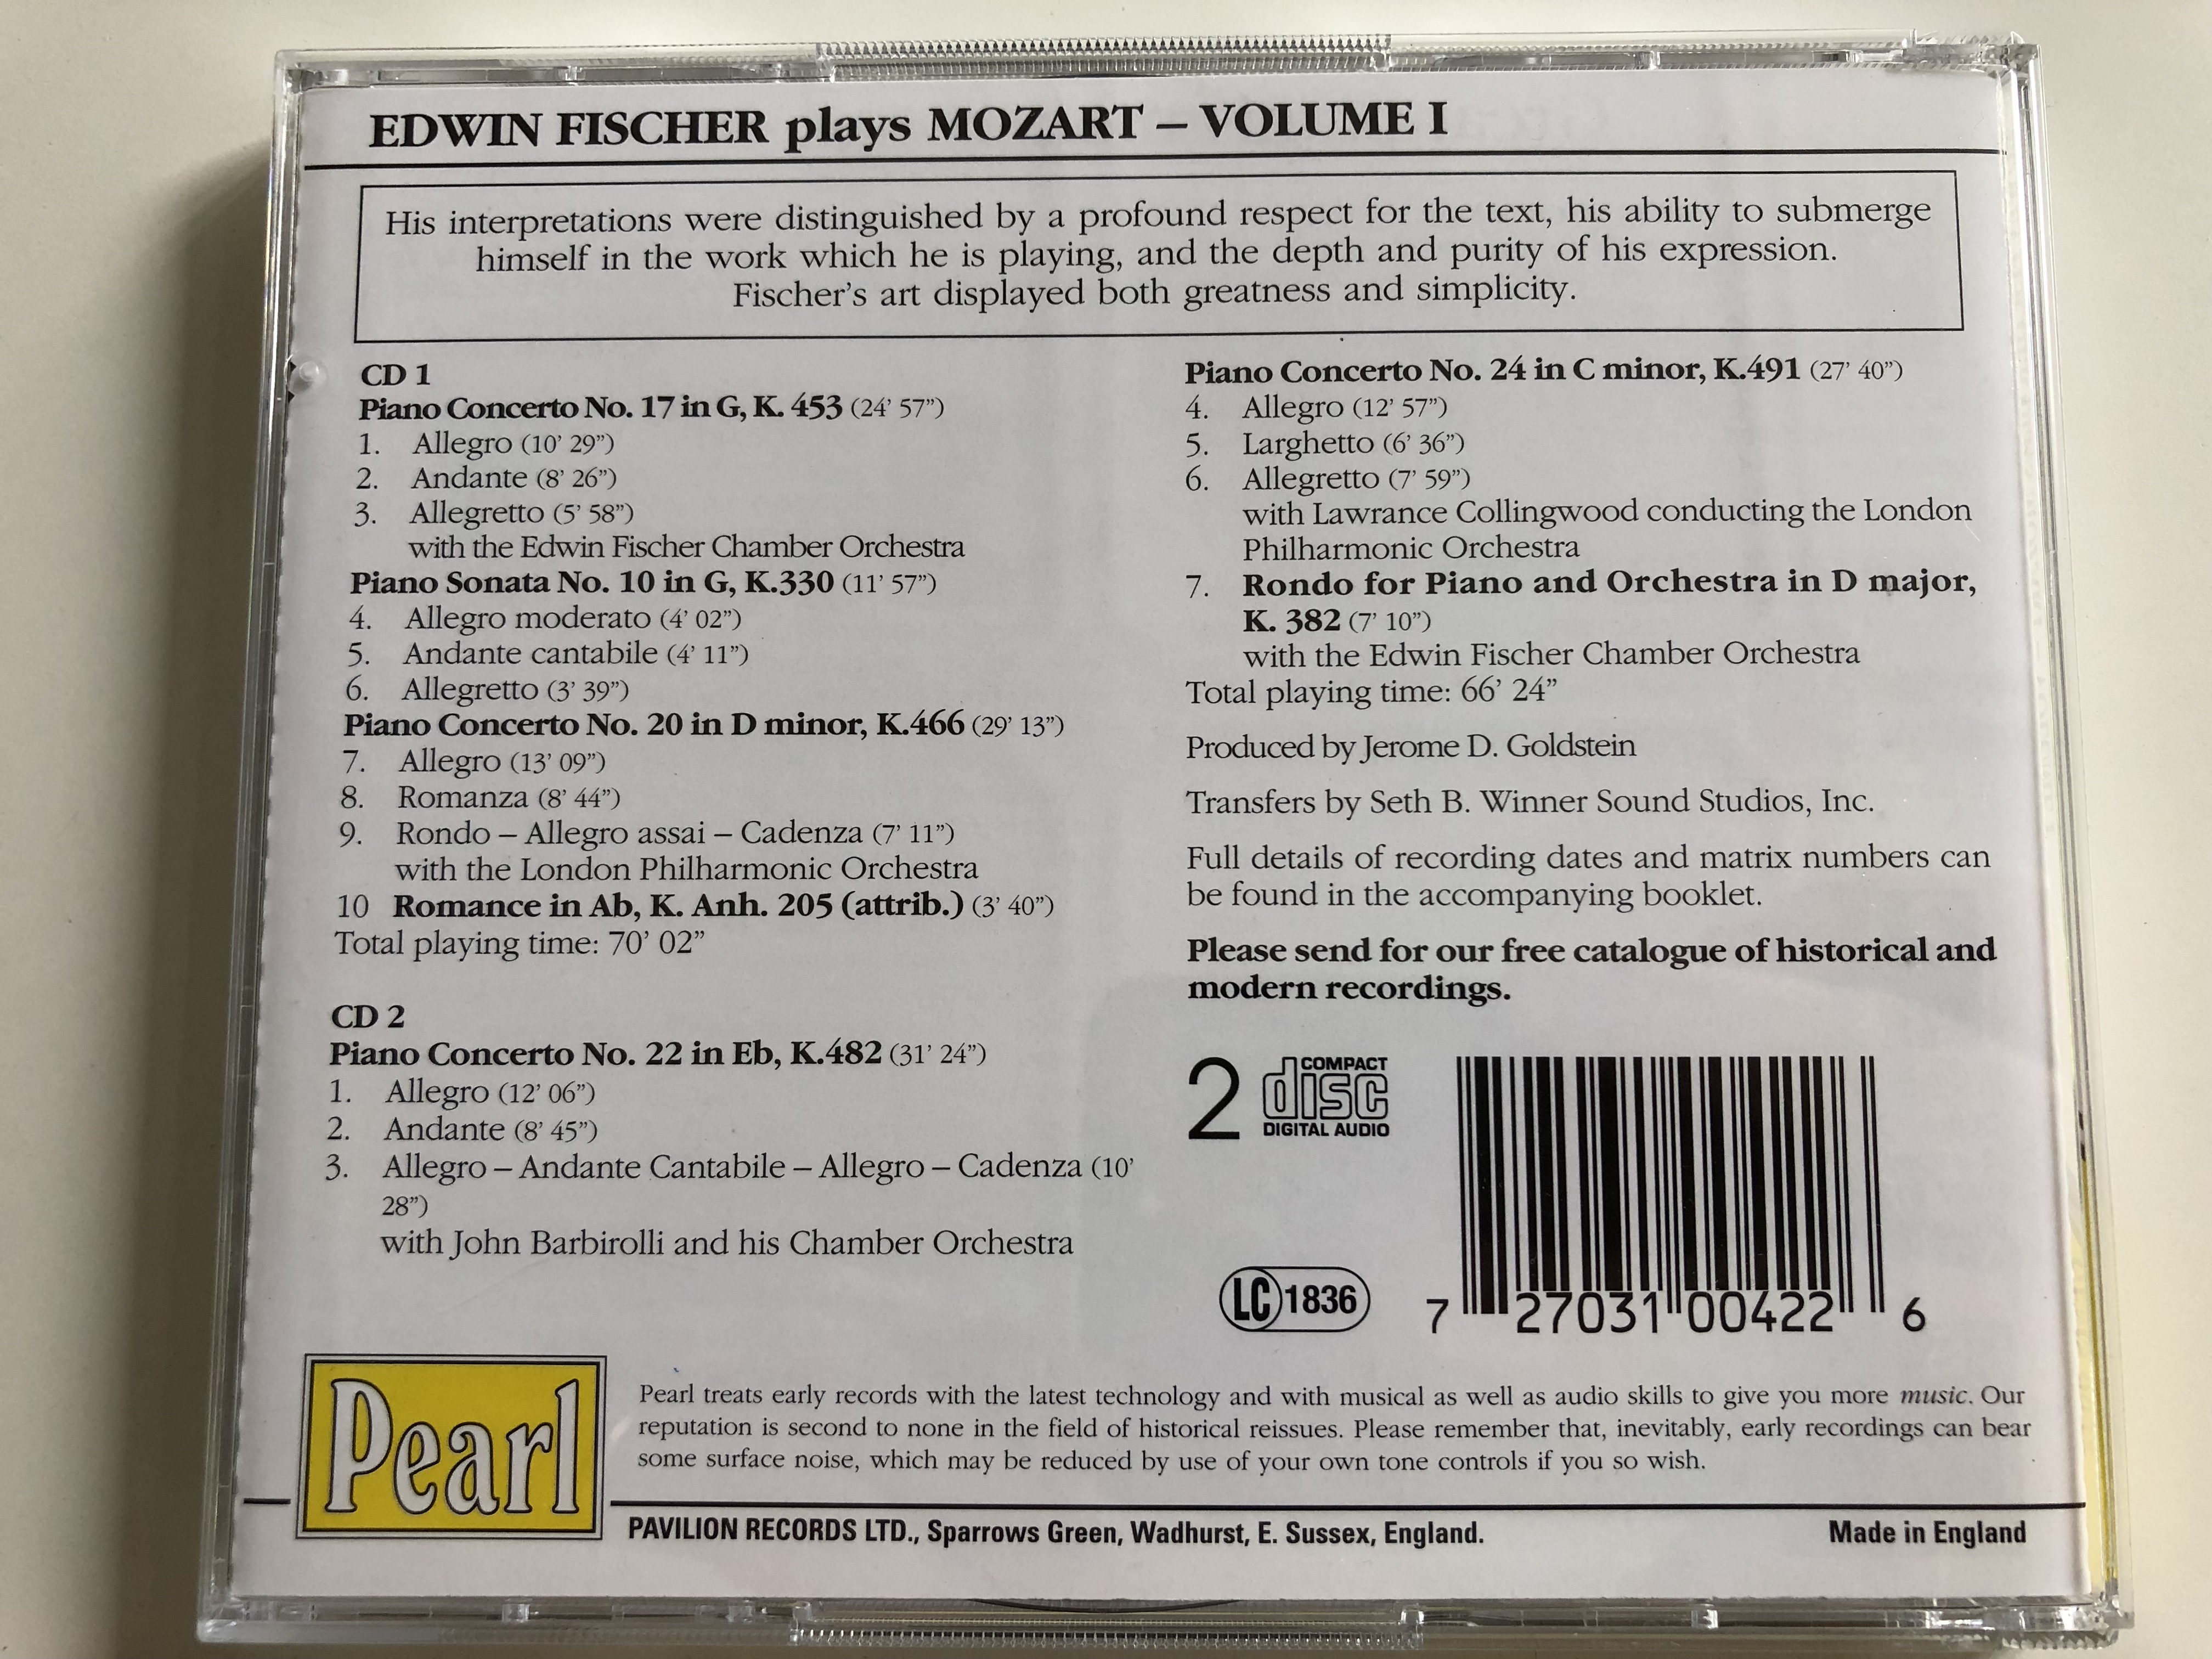 mozart-volume-i-edwin-fischer-piano-concerti-nos.-17-20-22-24-piano-sonata-no.-10-rondo-k382-romance-k.-anh.-205-pearl-audio-cd-1999-gems-0042-2-cd-10-.jpg